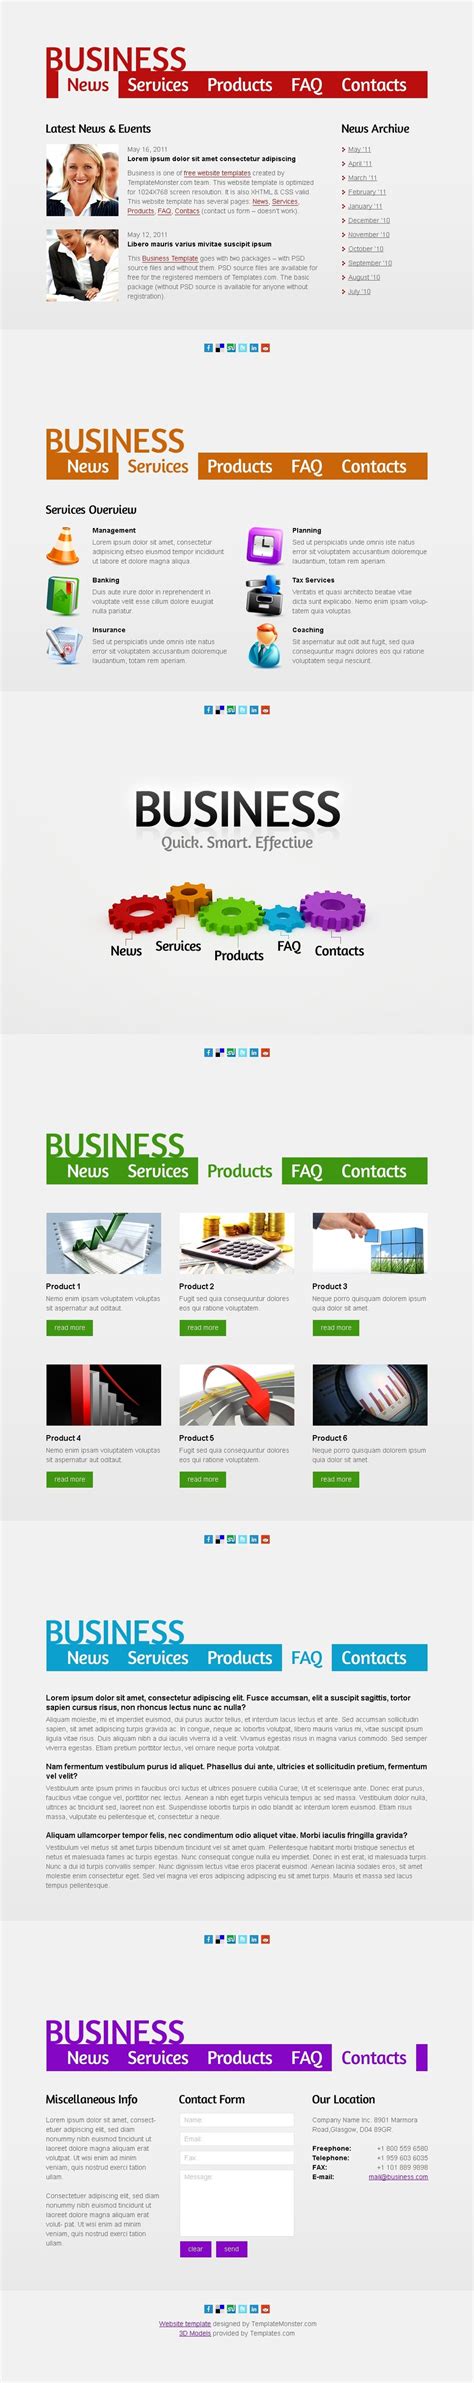 business web template single page layout